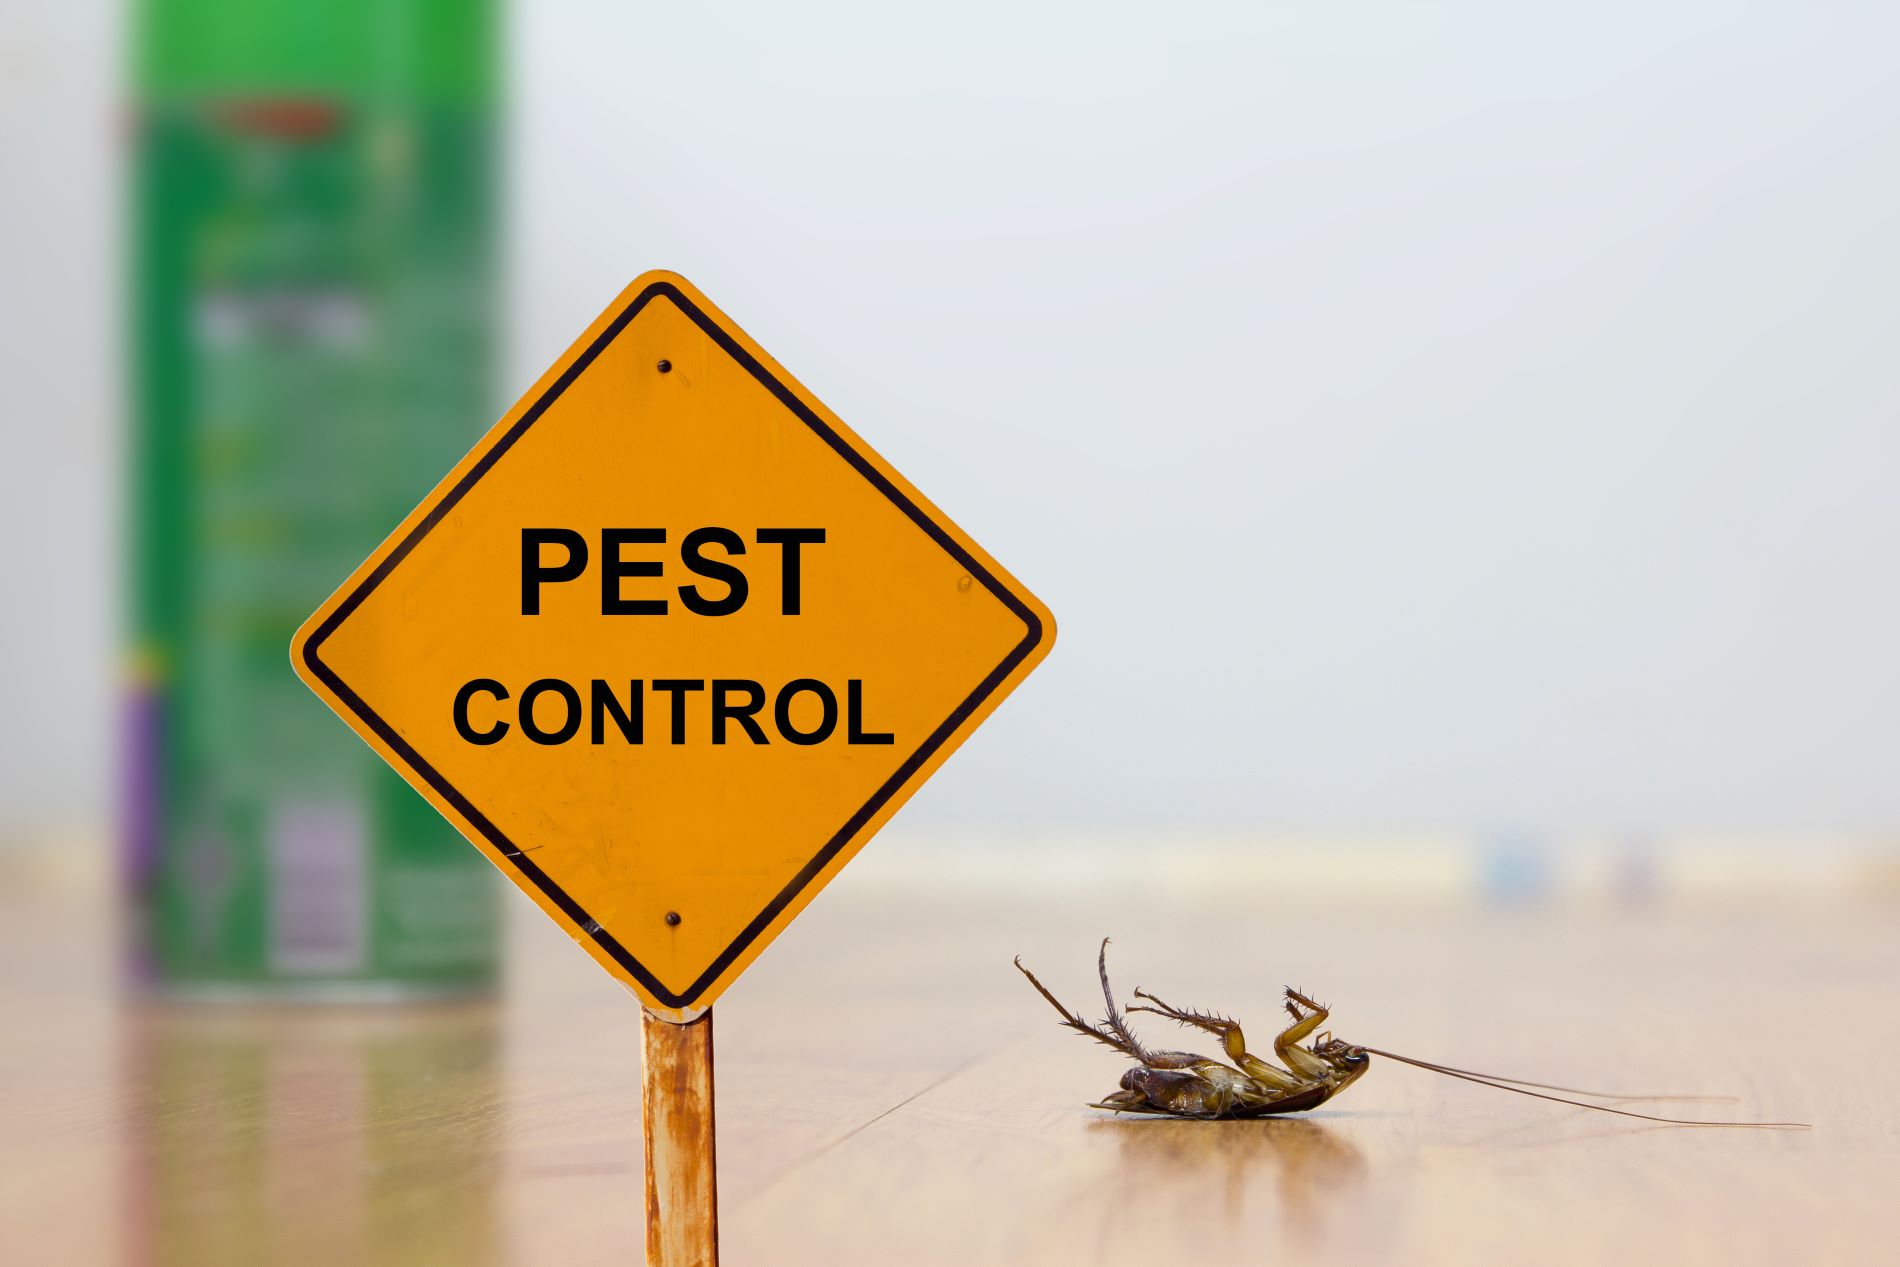 Pest Control 2